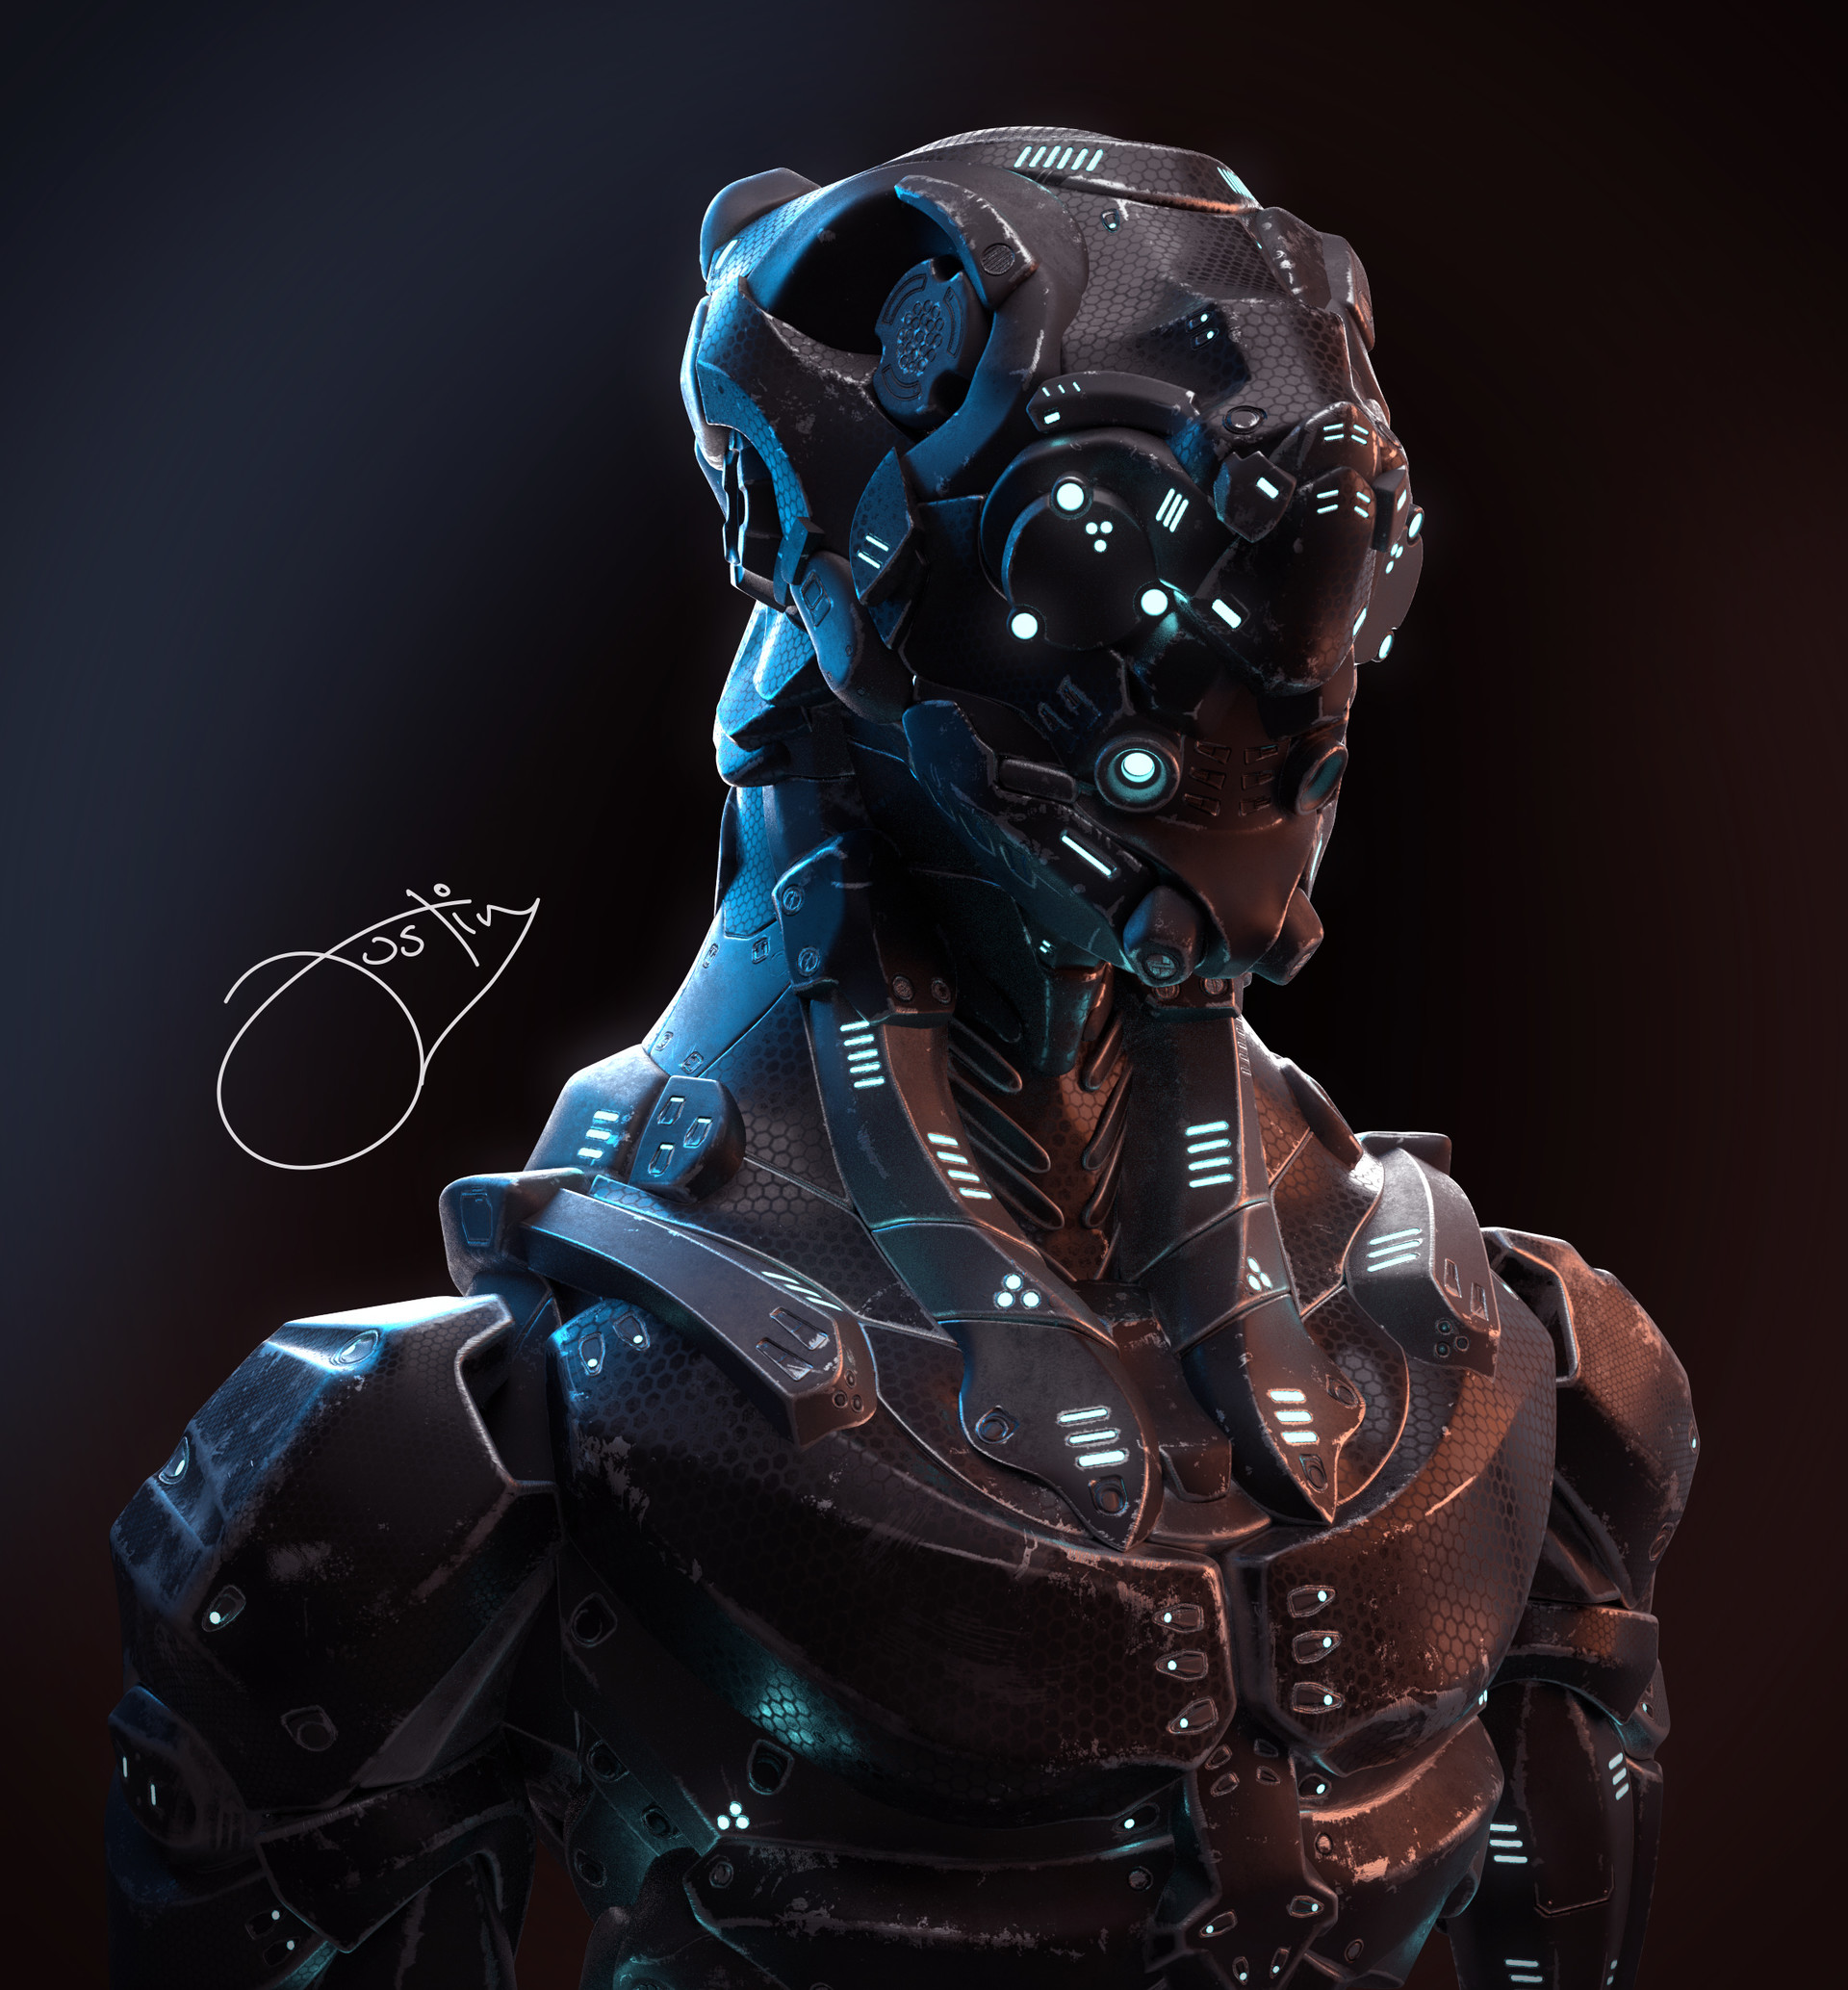 Cool Alien Armor Concept Art